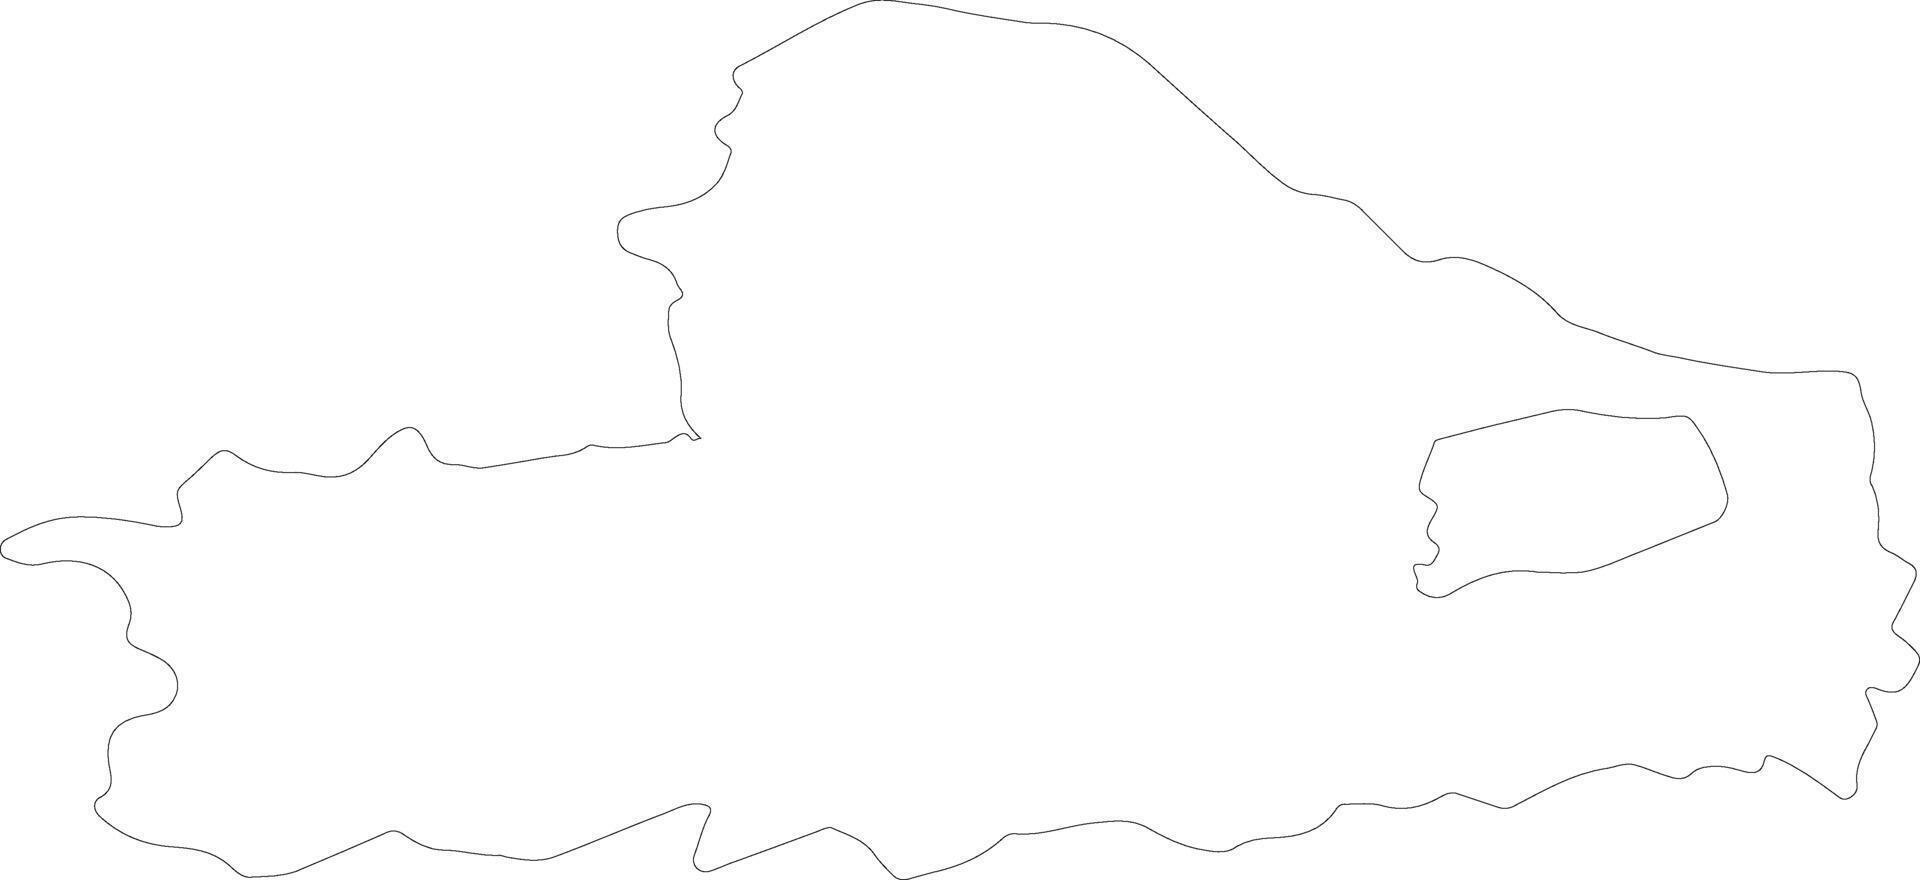 Gyor-Moson-Sopron Hungary outline map vector